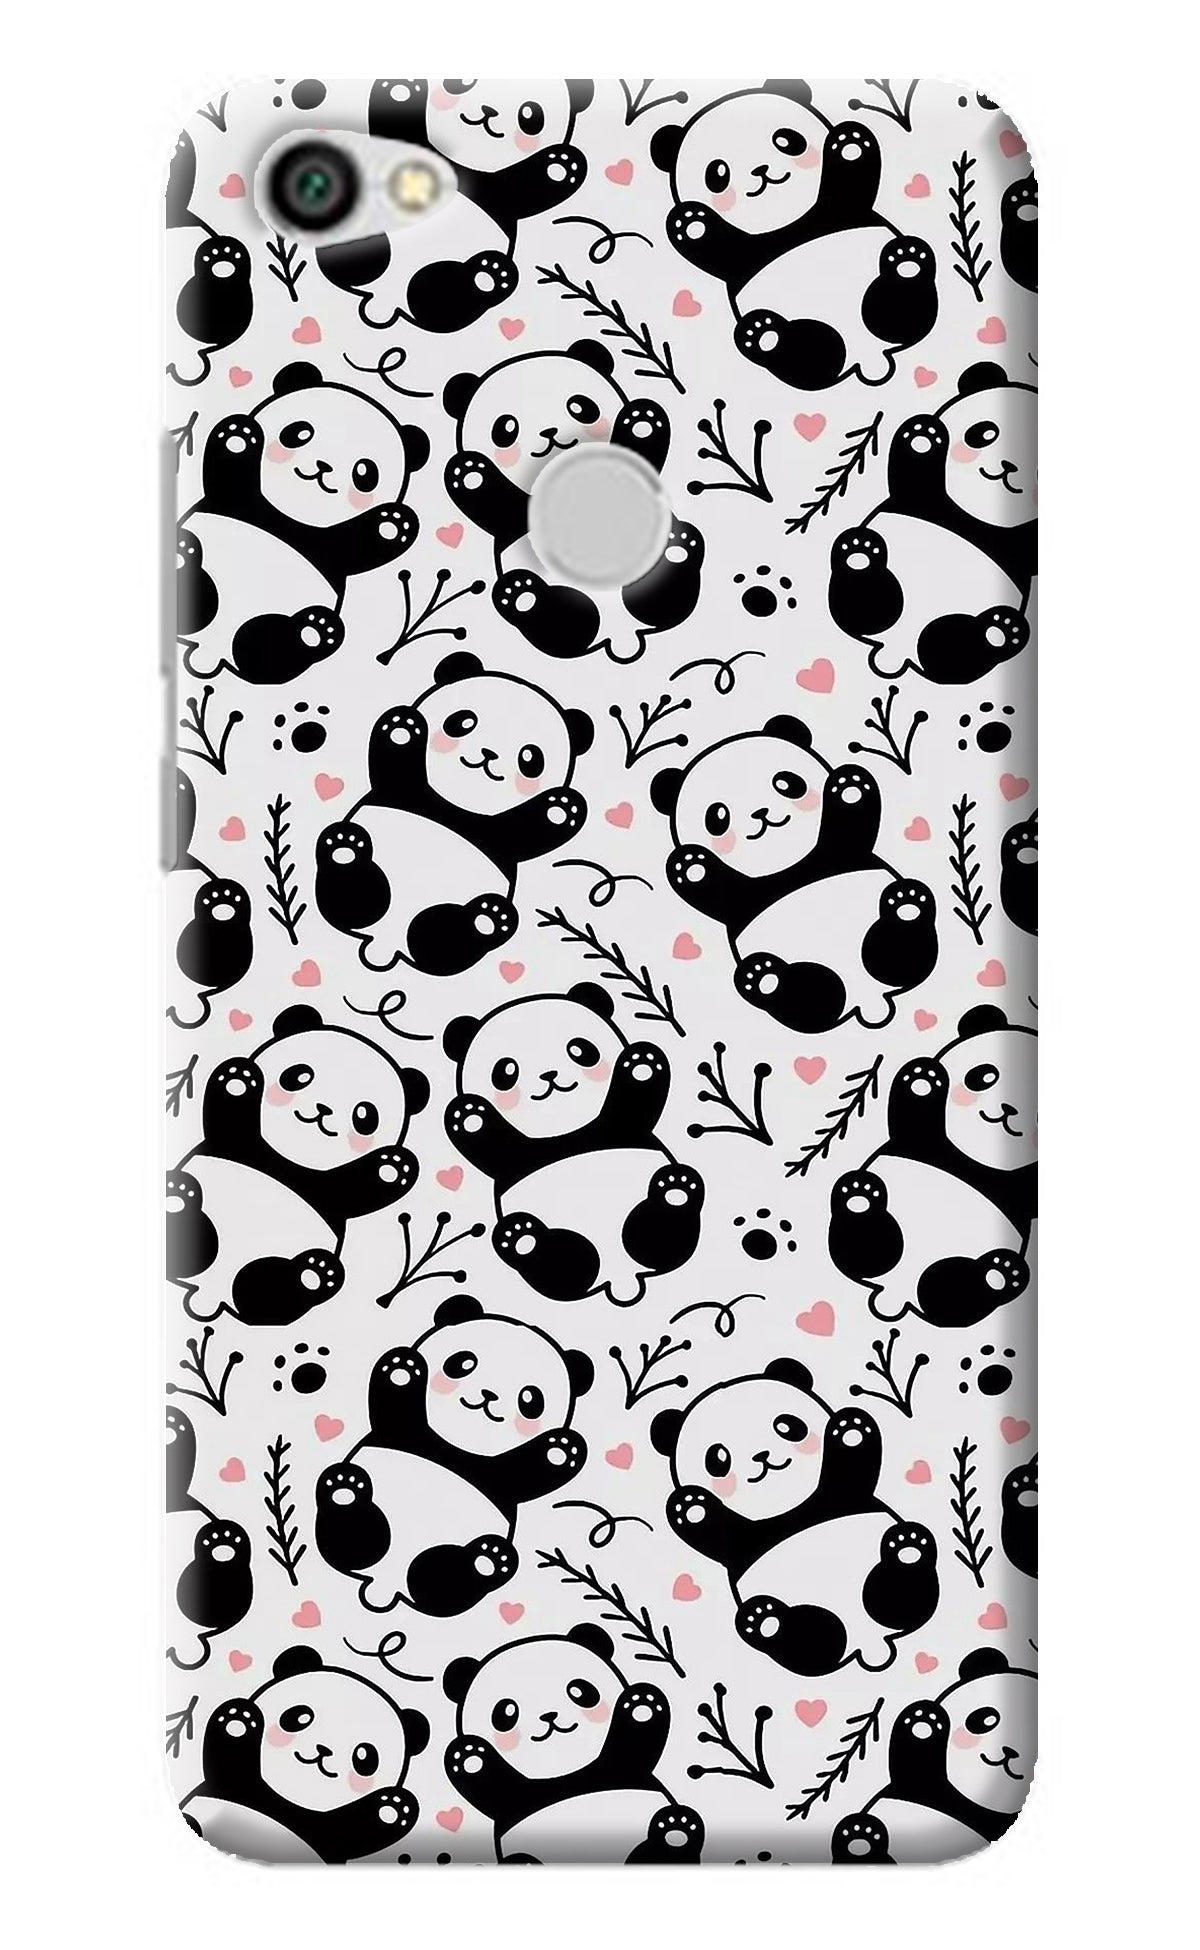 Cute Panda Redmi Y1 Back Cover